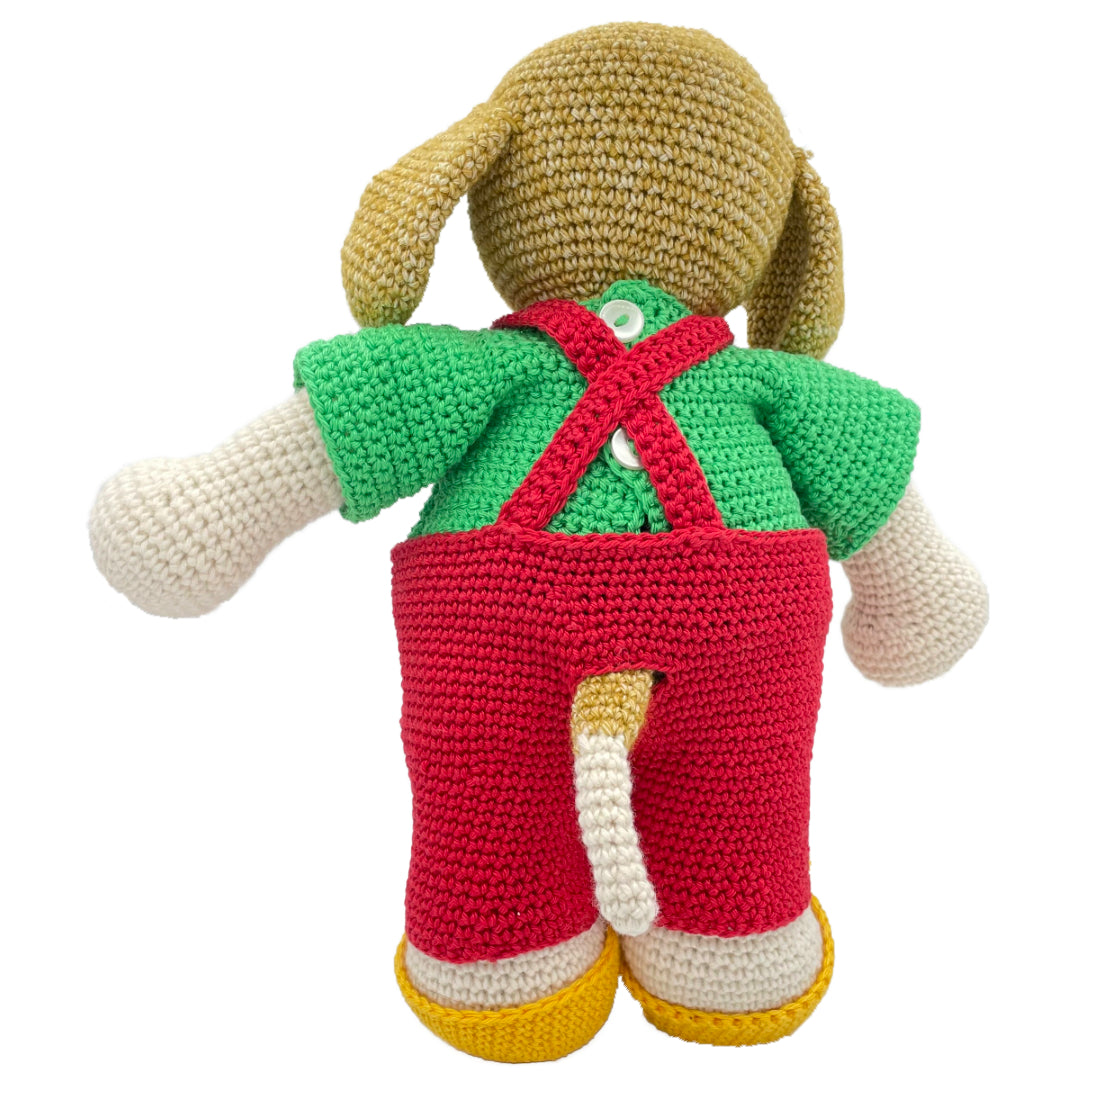 Amigurumi Crochet Pattern Dog Didi back